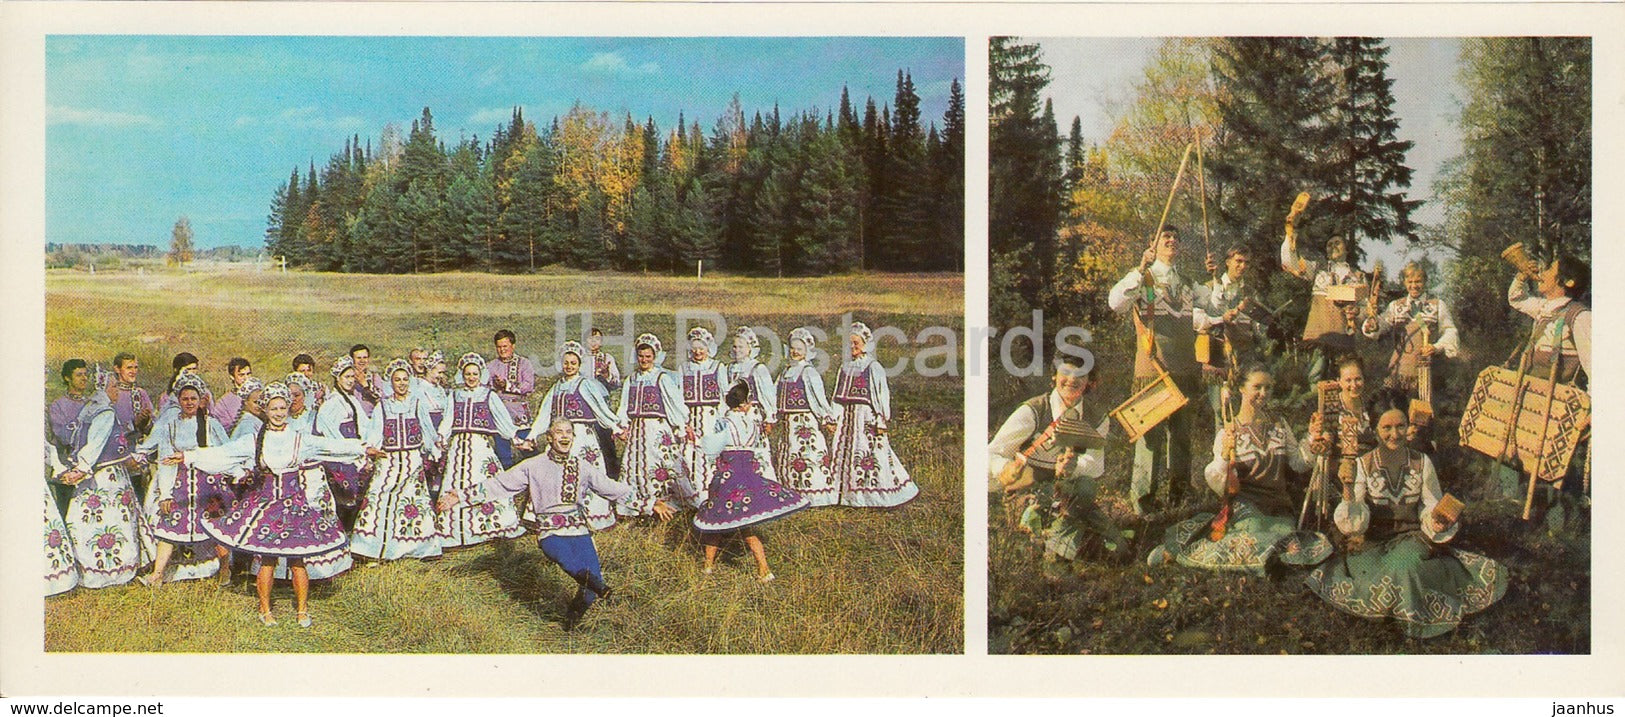 Dance Ensemble Asya Kya - Folk group Sigudek - folk costumes - Komi Republic - 1984 - Russia USSR - unused - JH Postcards